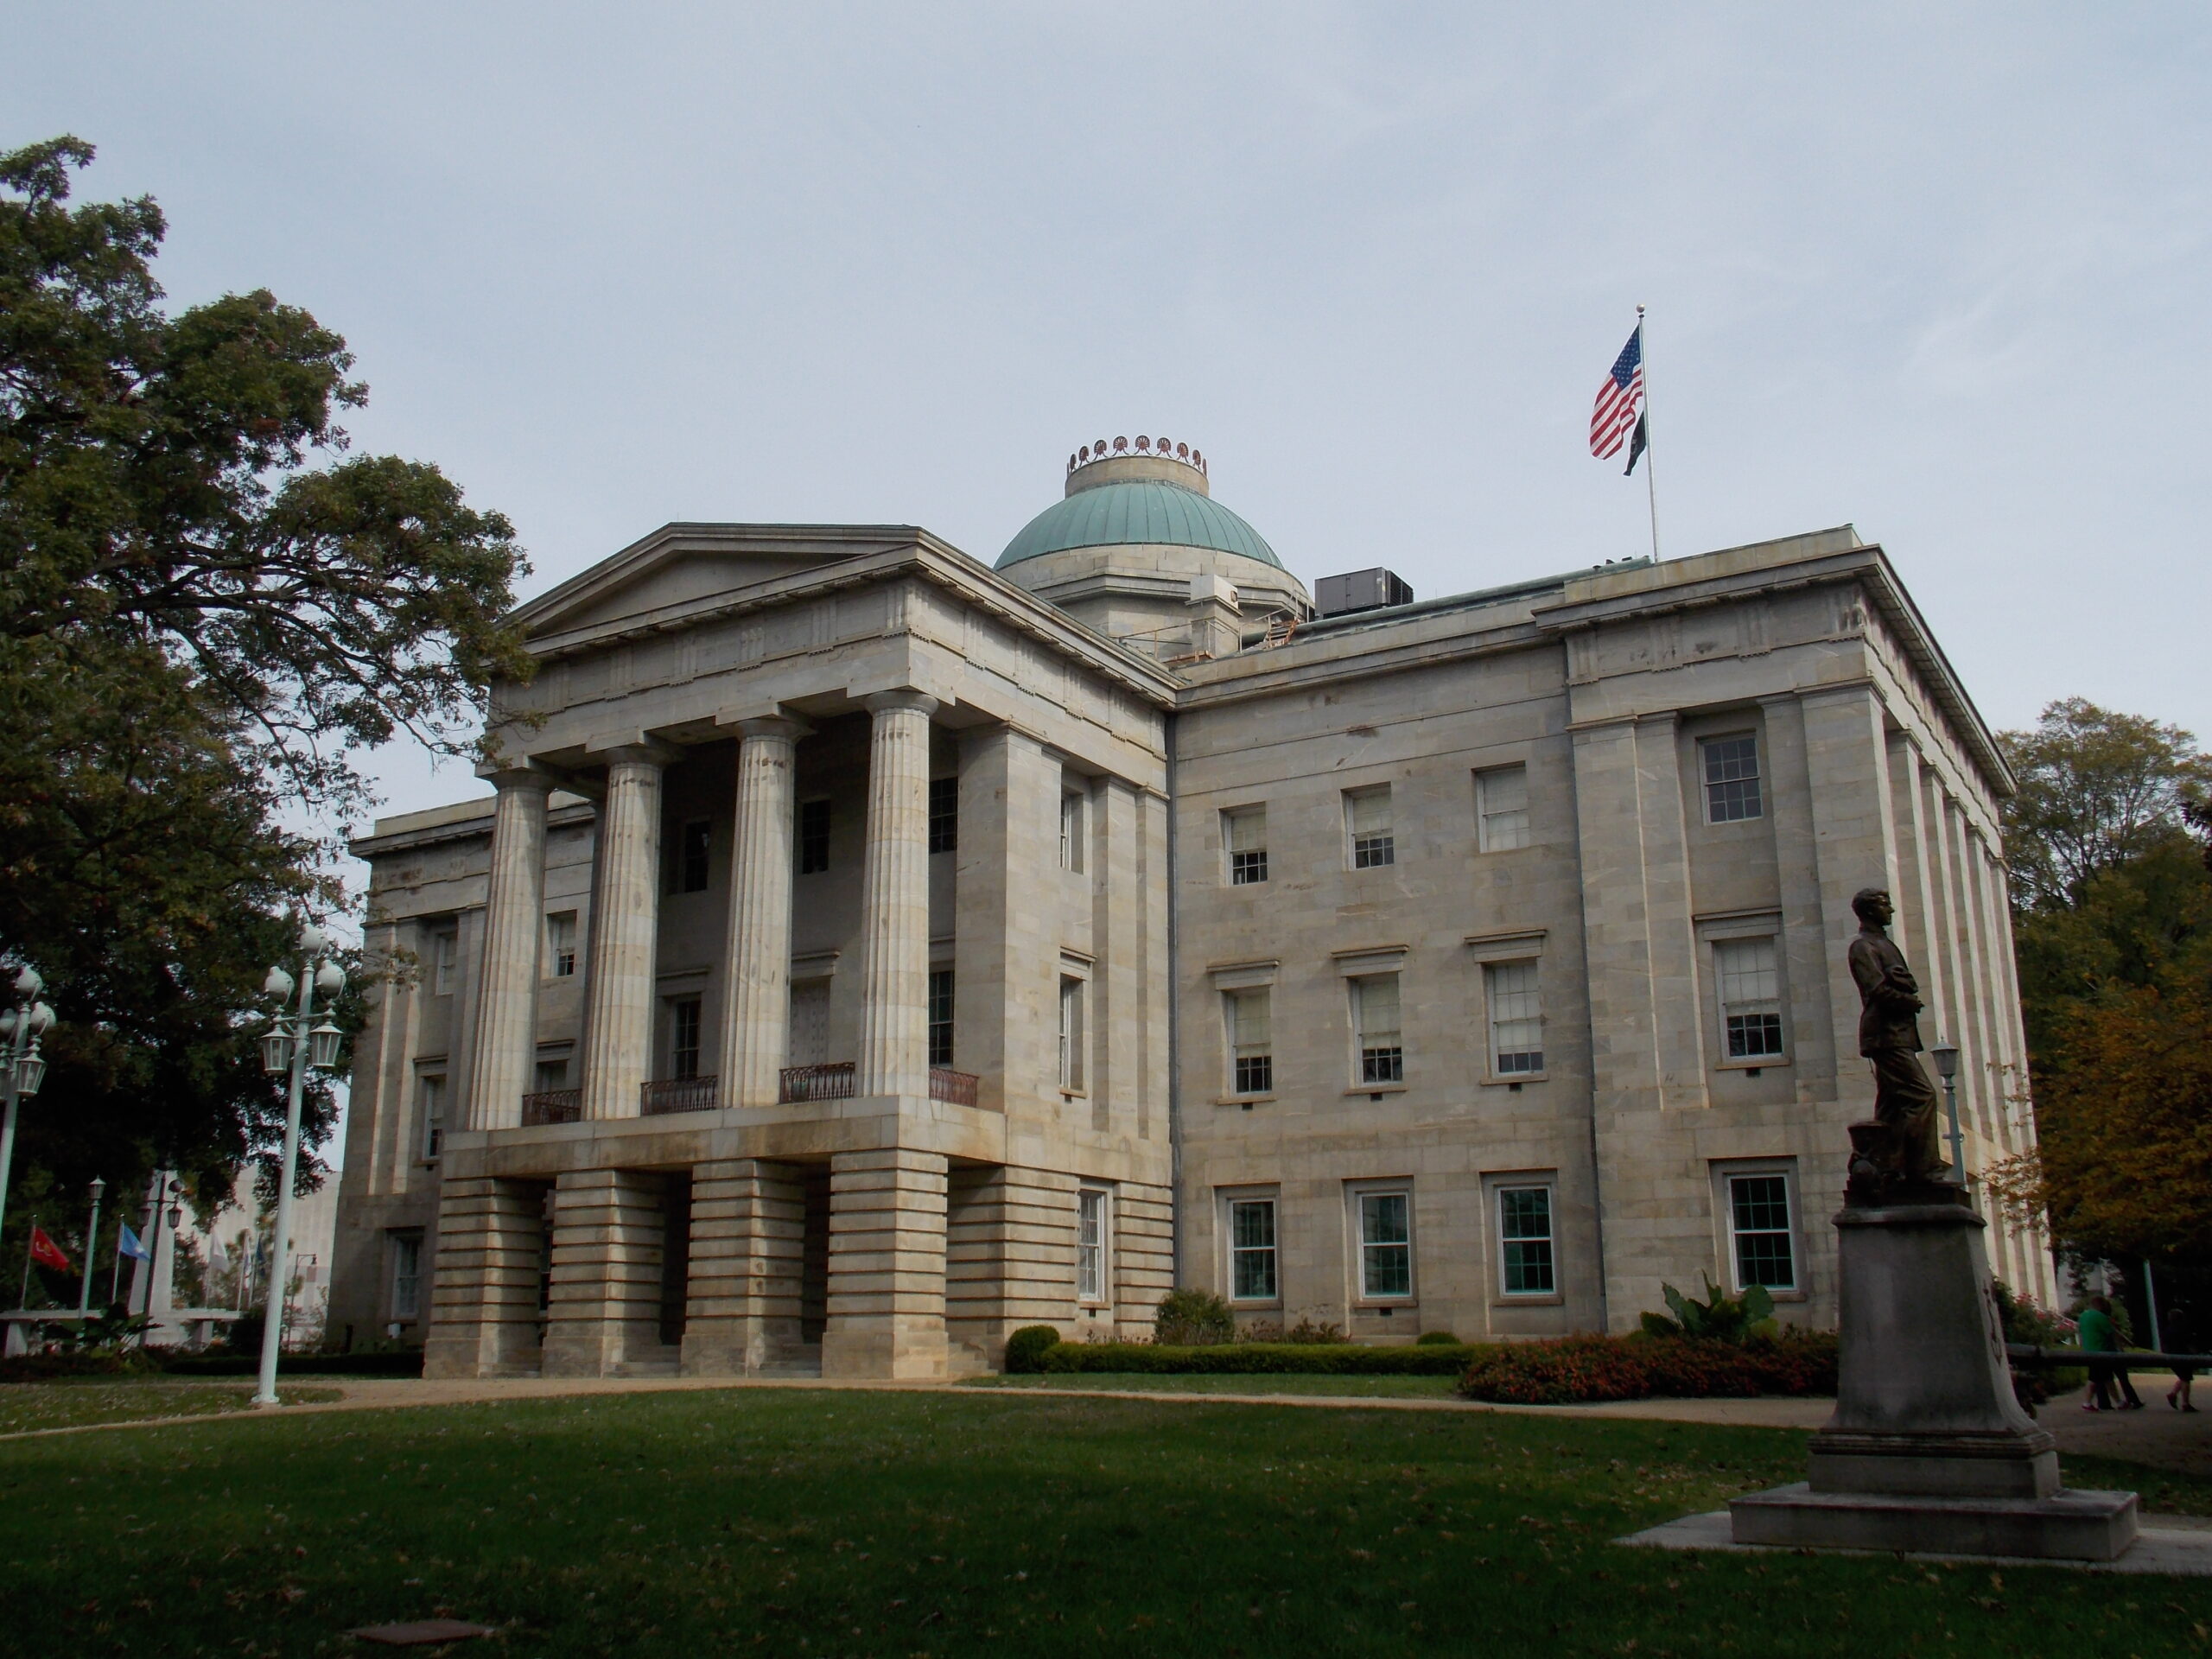 The North Carolina state capitol building in Raleigh, North Carolina.